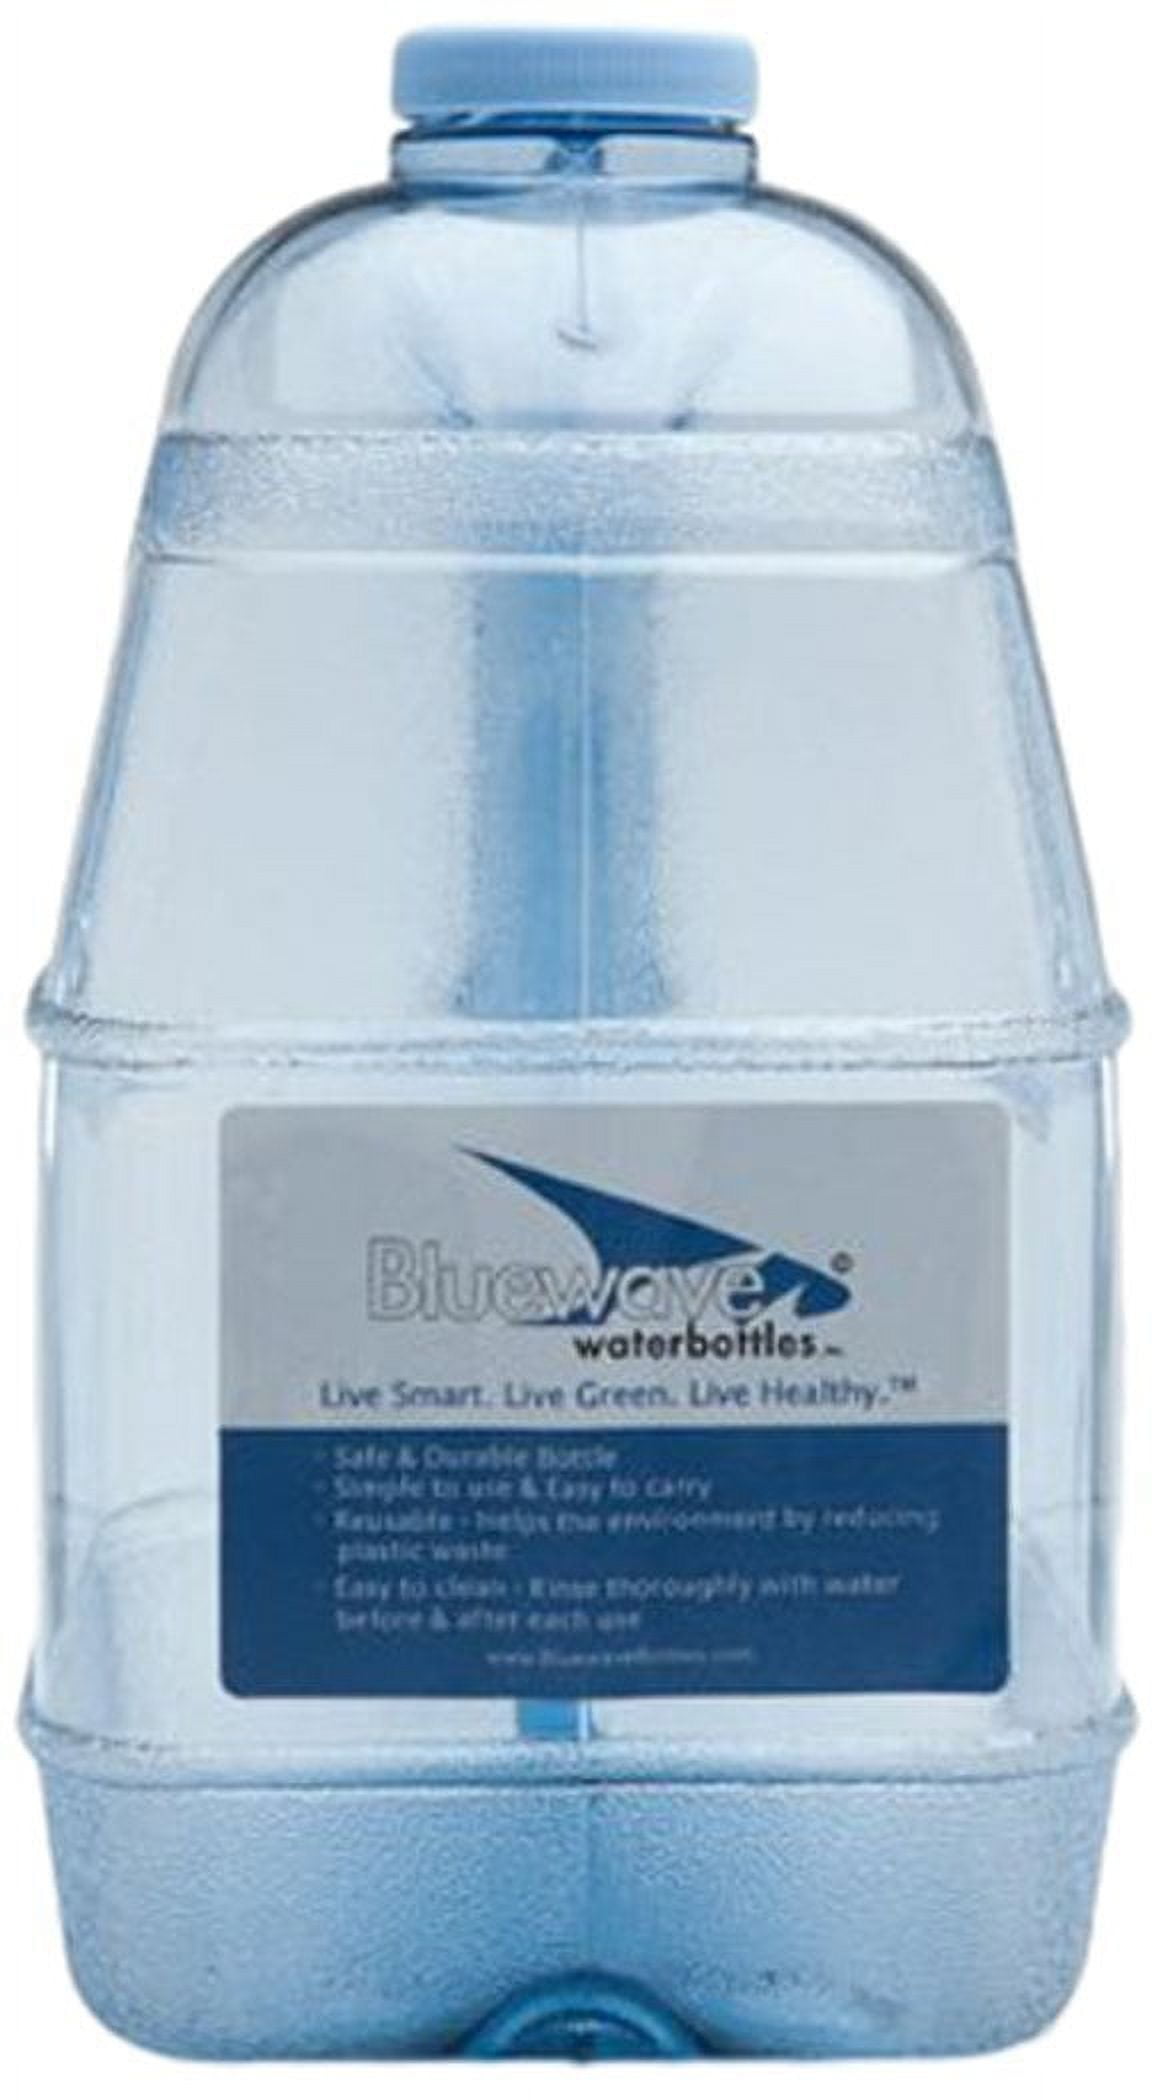 5 Gallon Water Jug Large Reusable Container Bottle Durable Plastic Big BPA Free, Blue